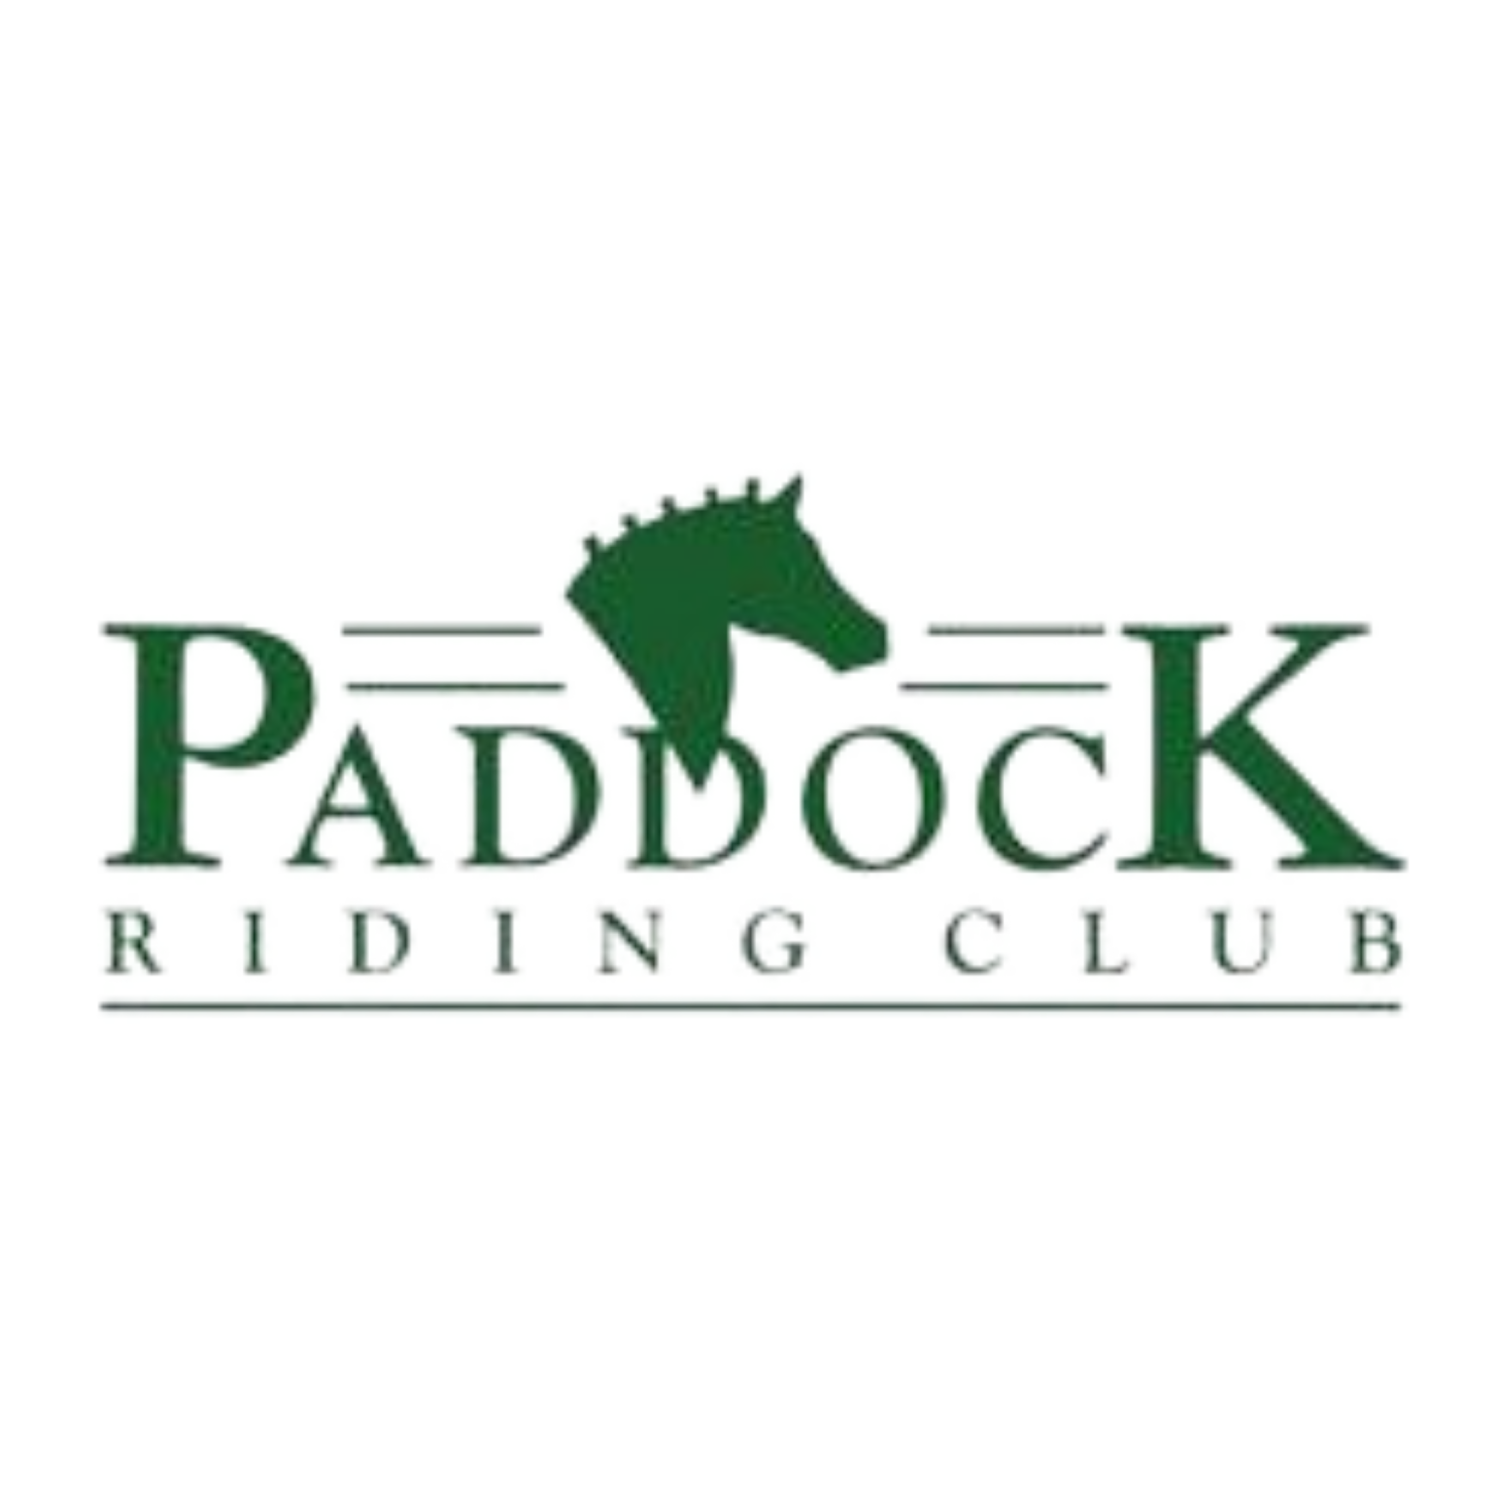 The Paddock Riding Club